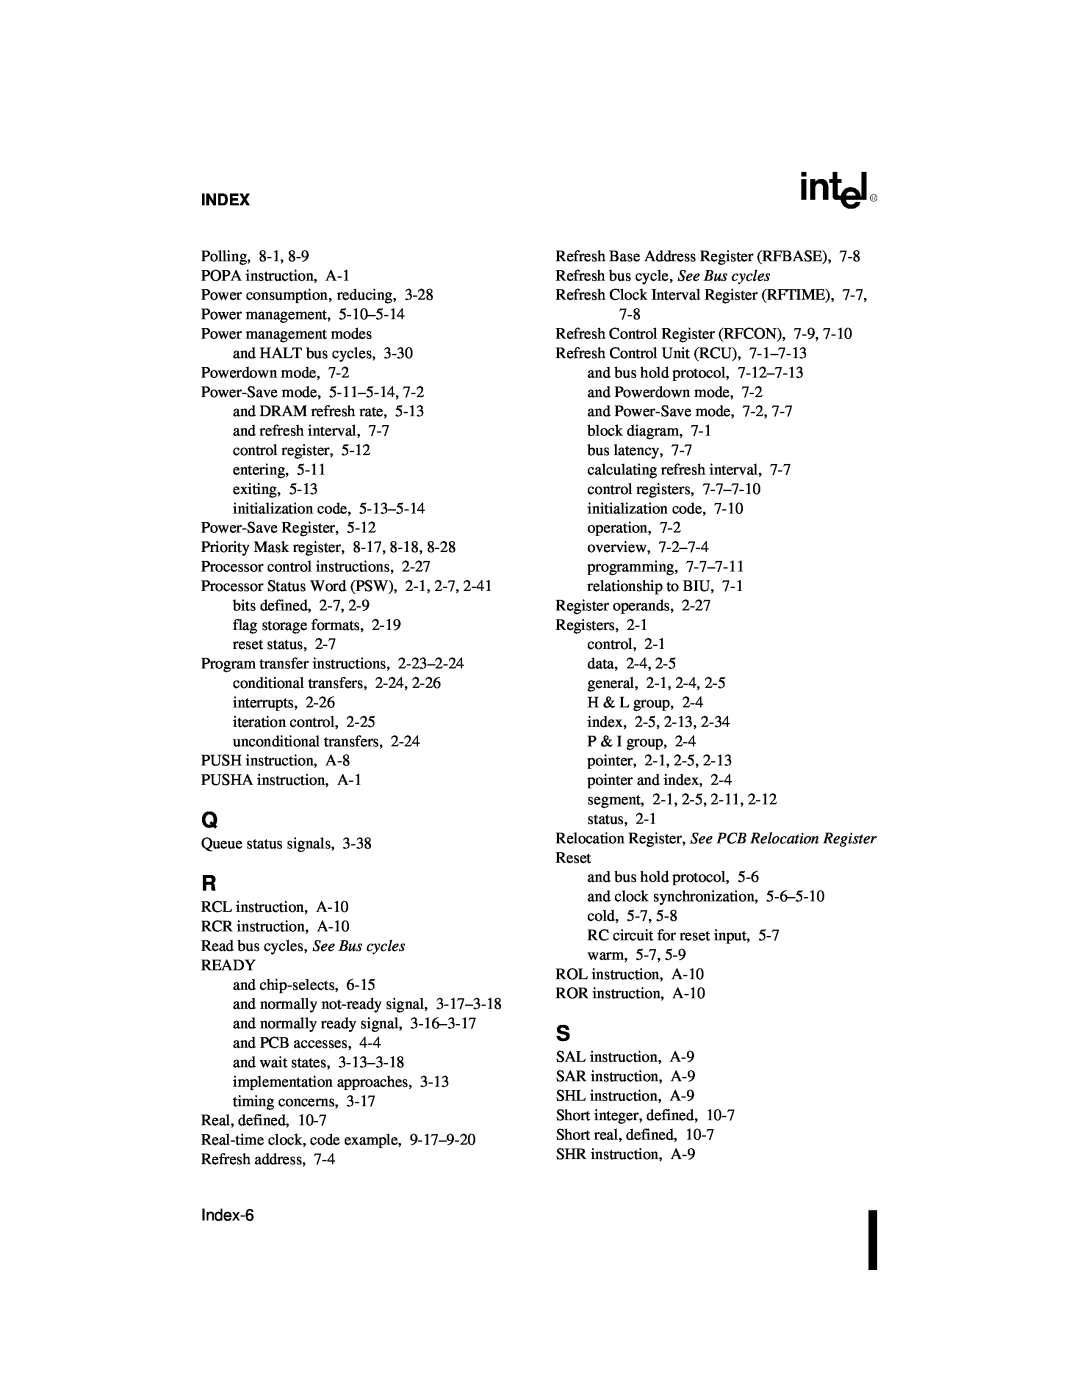 Intel 80C186XL, 80C188XL user manual Index-6 